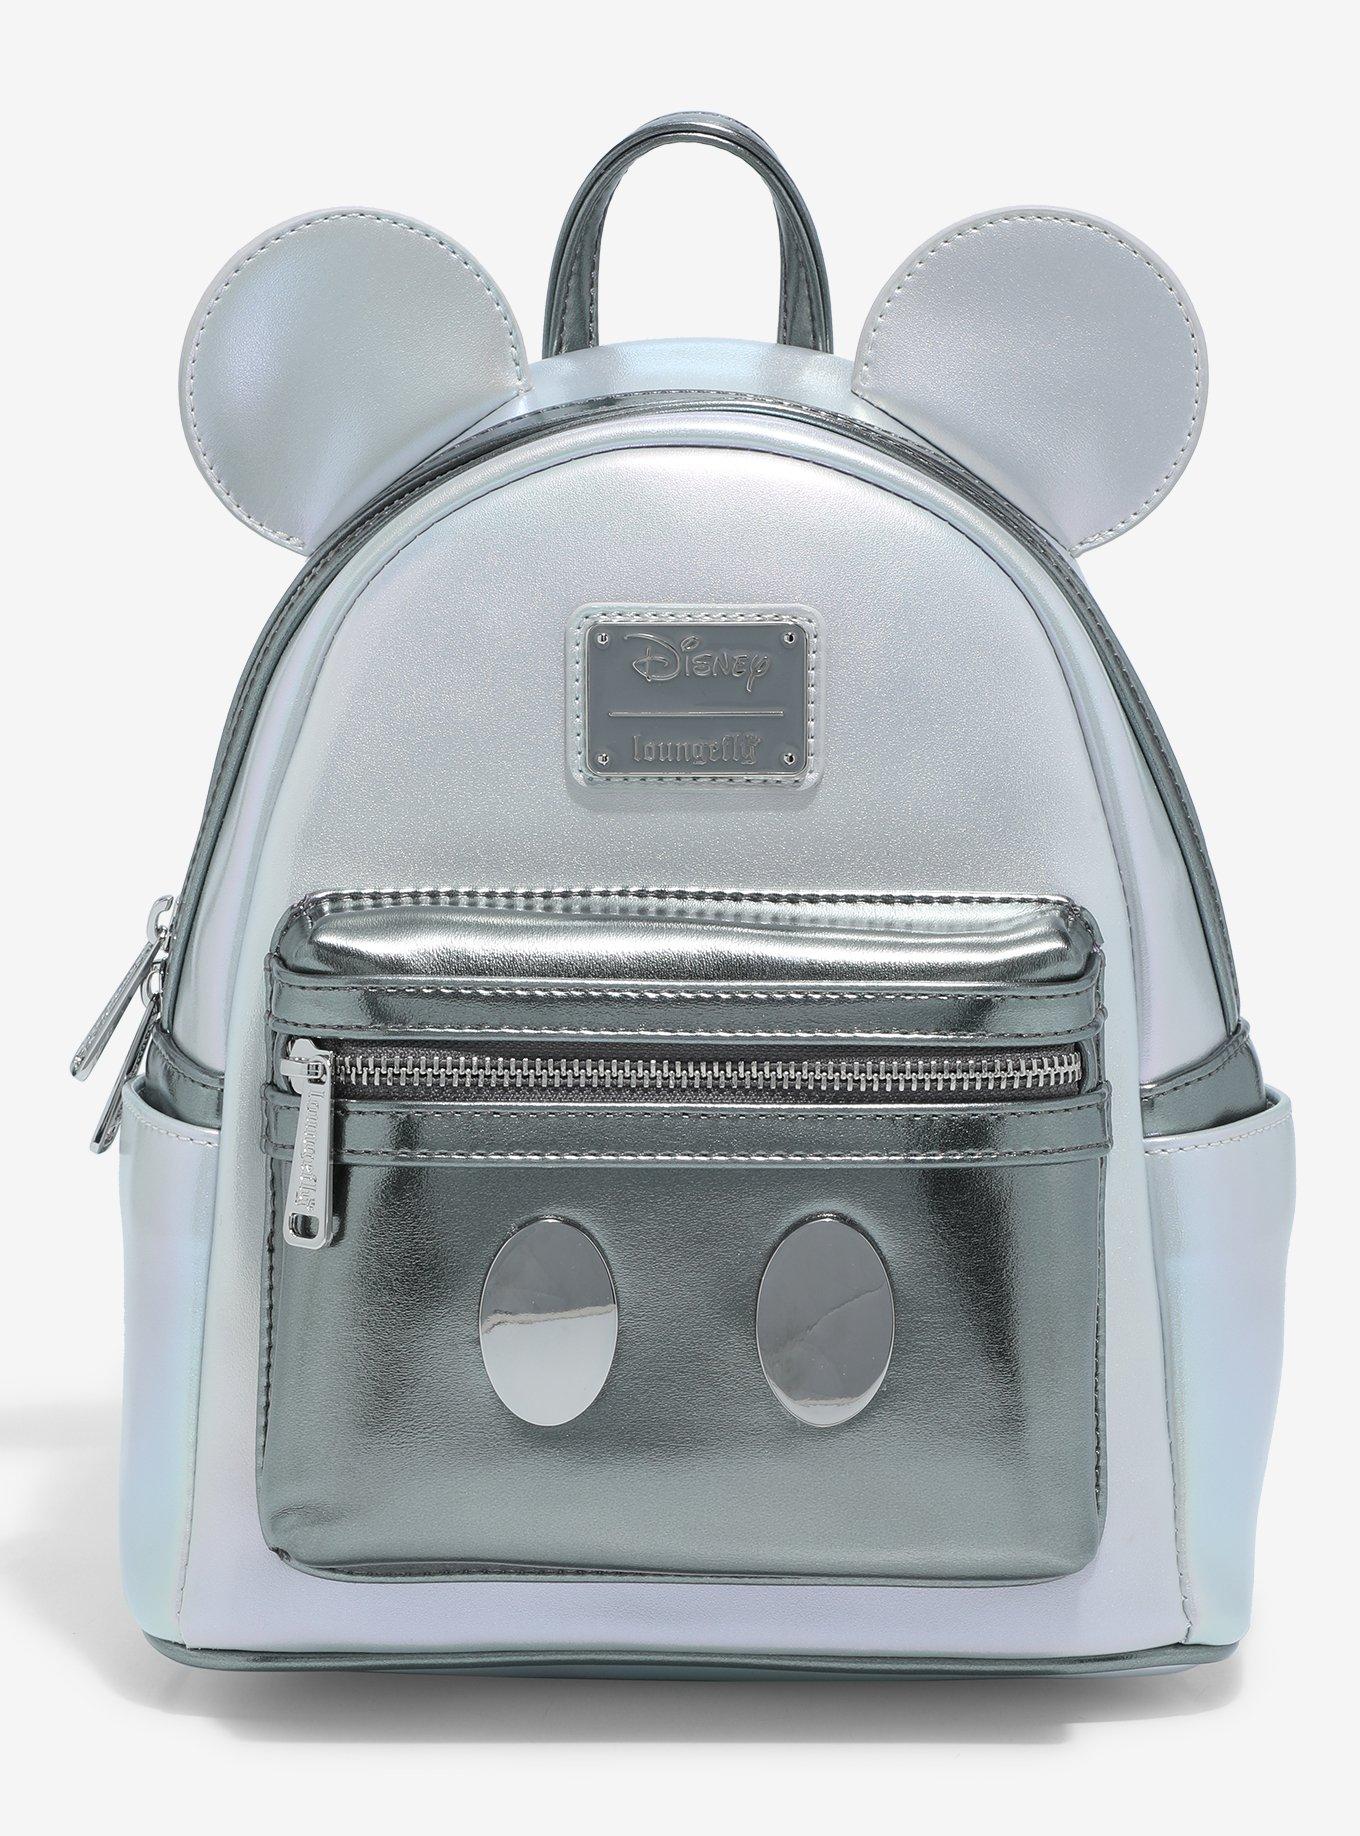 Disney Loungefly Mini Backpack - Pop by LF - Princess Circles